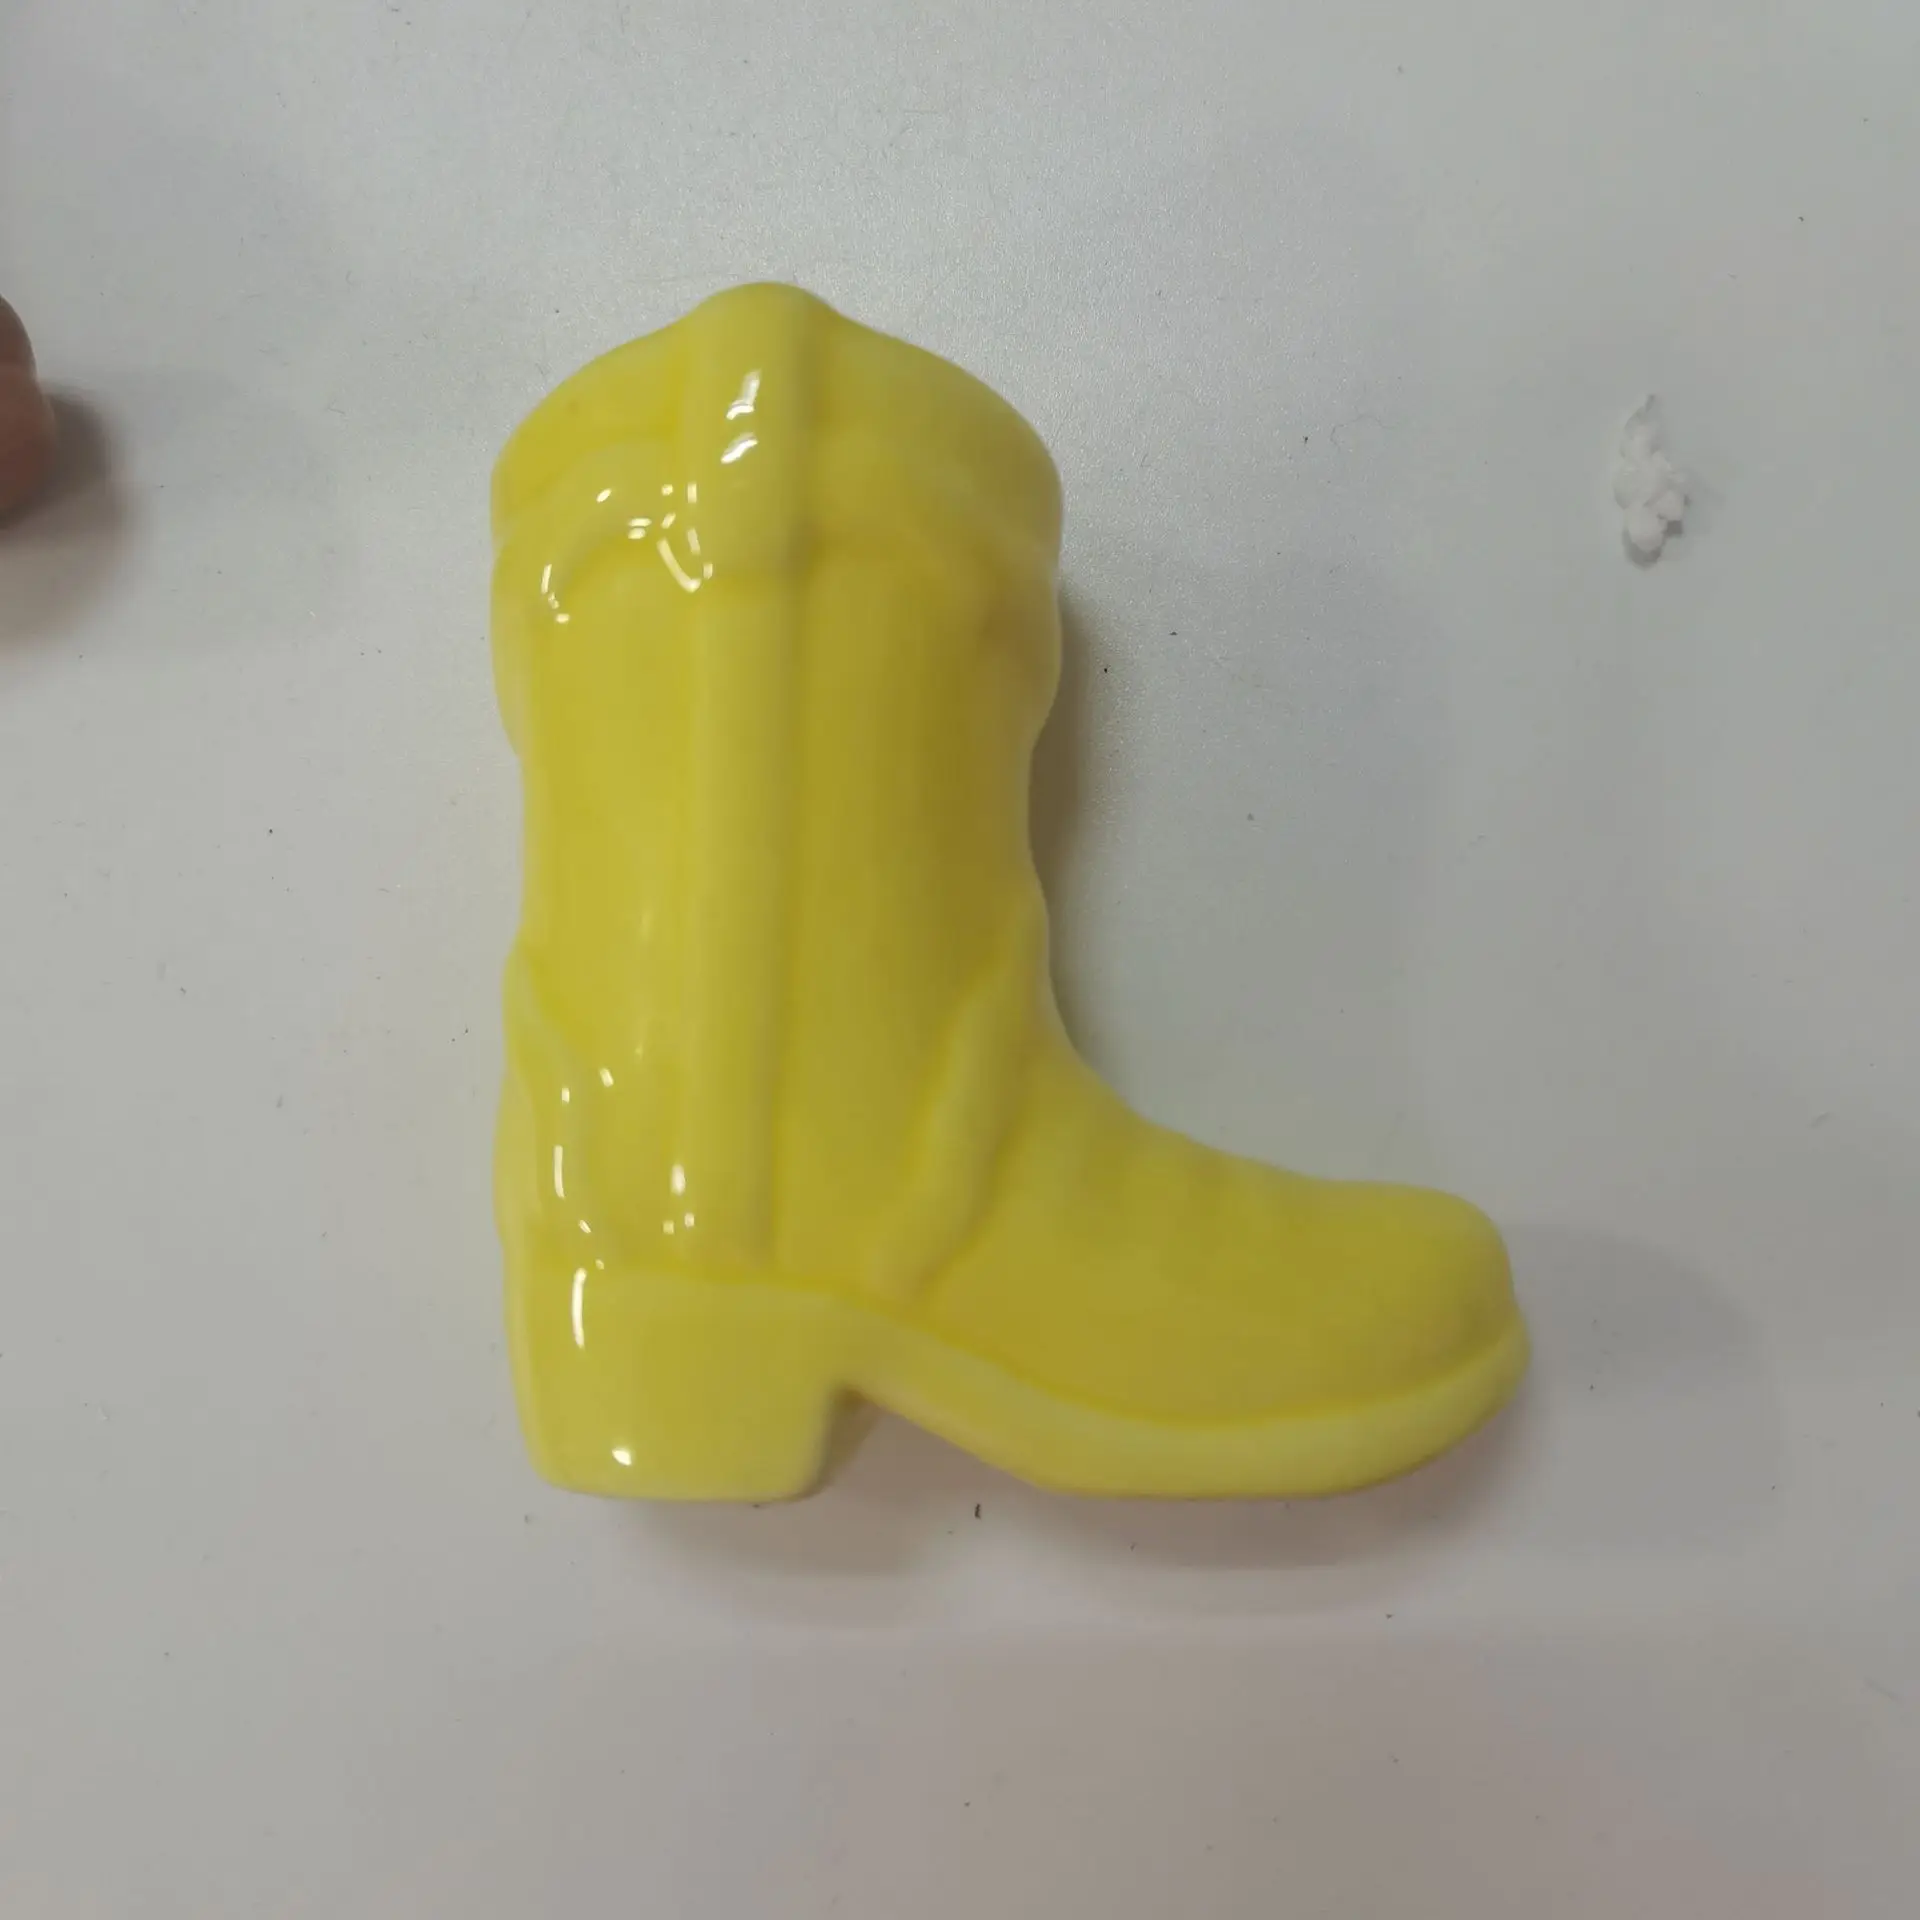 Comprar 1 soporte para cerillas, adorable bota de cerámica de 7,8x6,8x3,5  cm